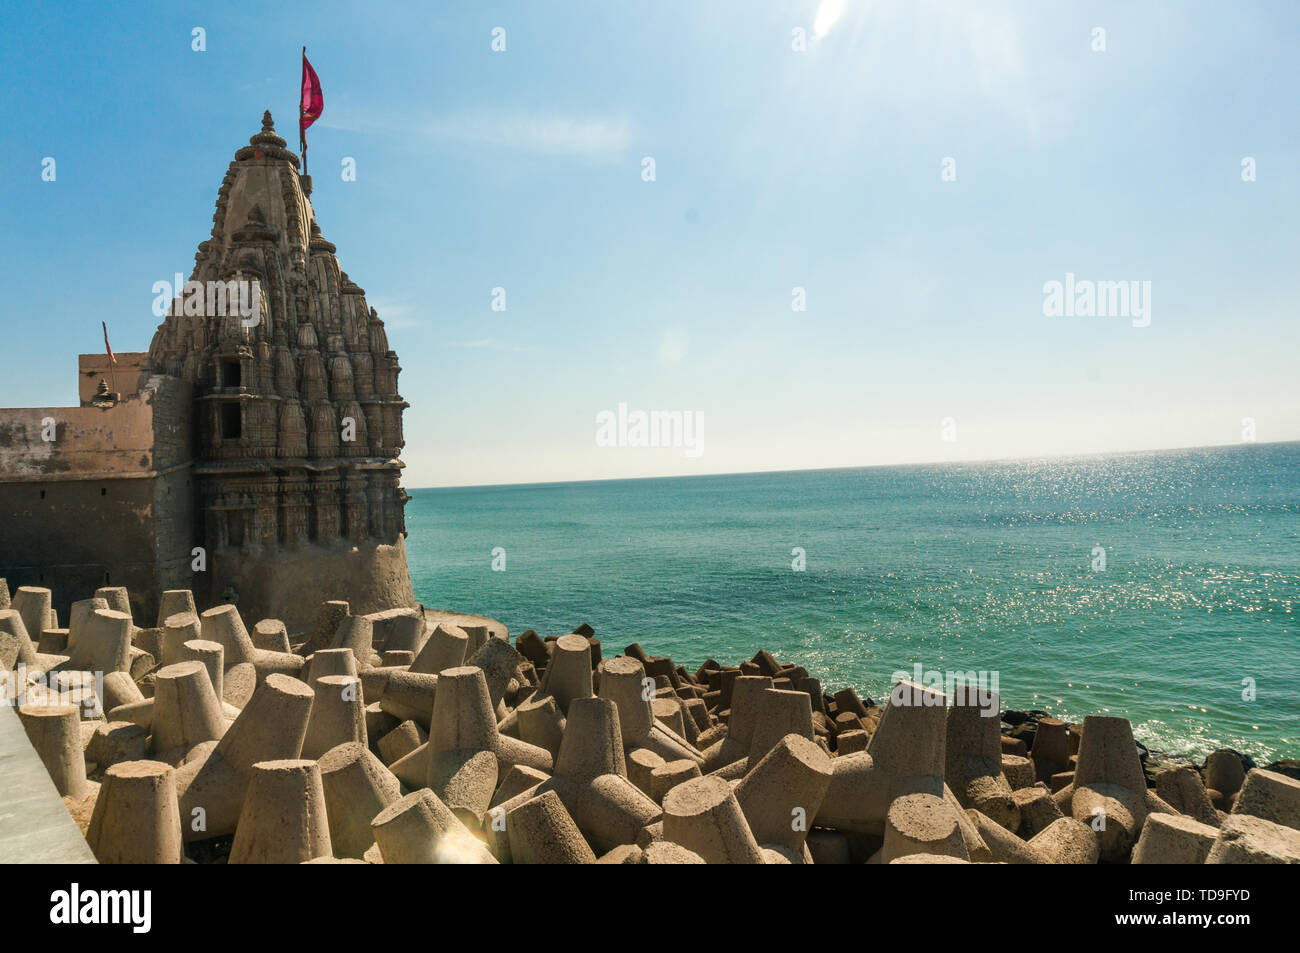 Lone hindu temple with flag on arabian sea coast with wave breakers Stock Photo